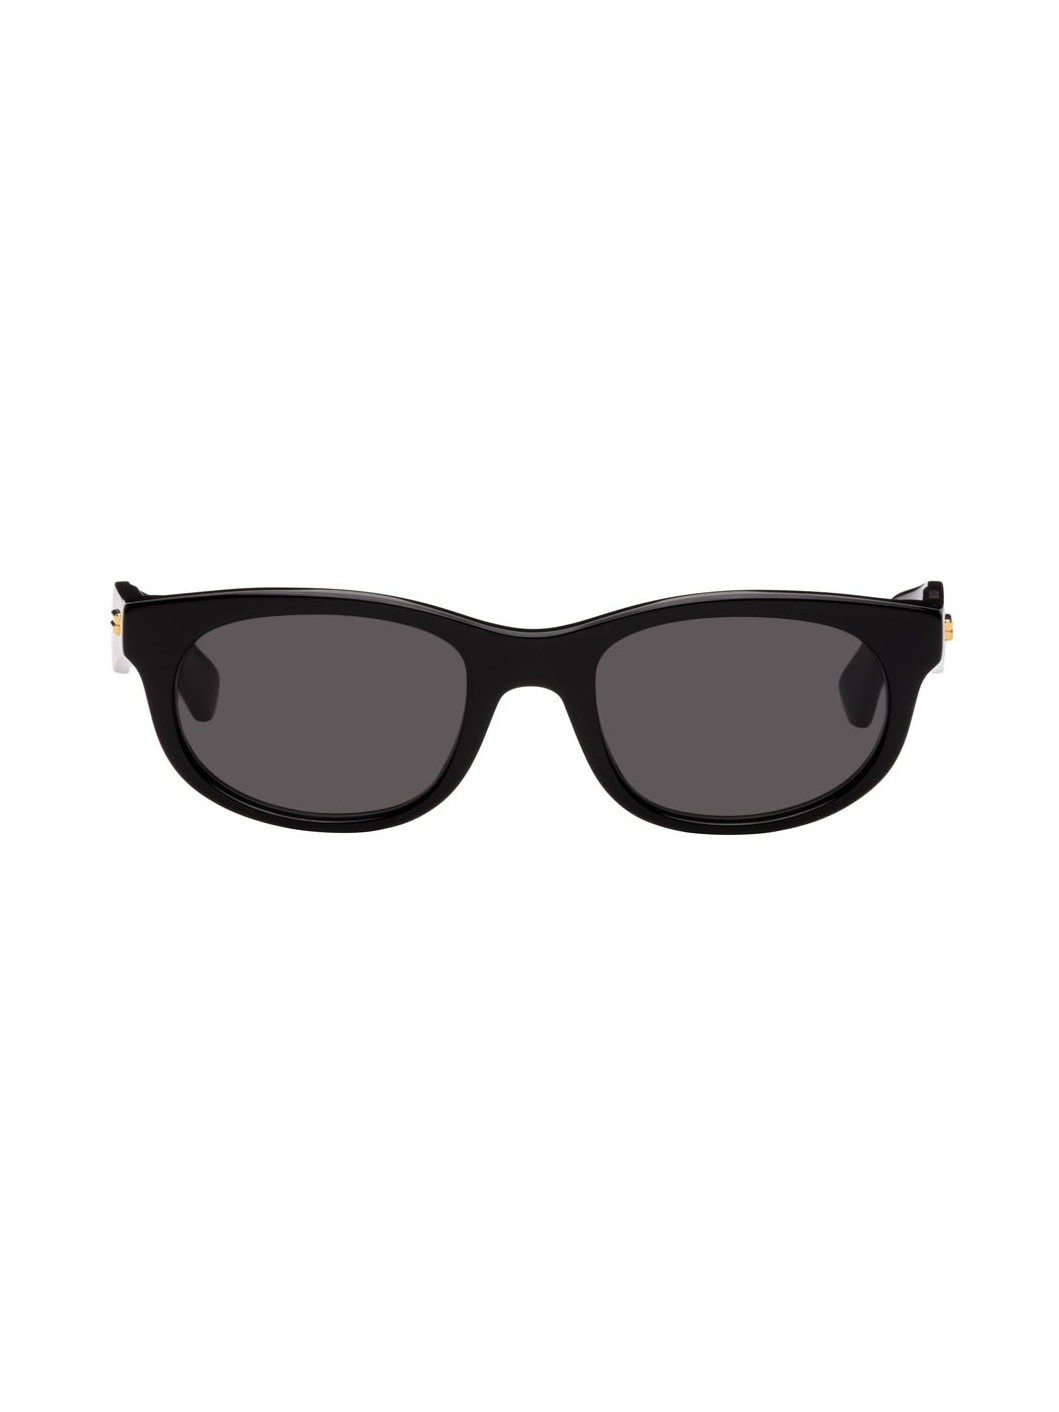 Black Oval Sunglasses - 1